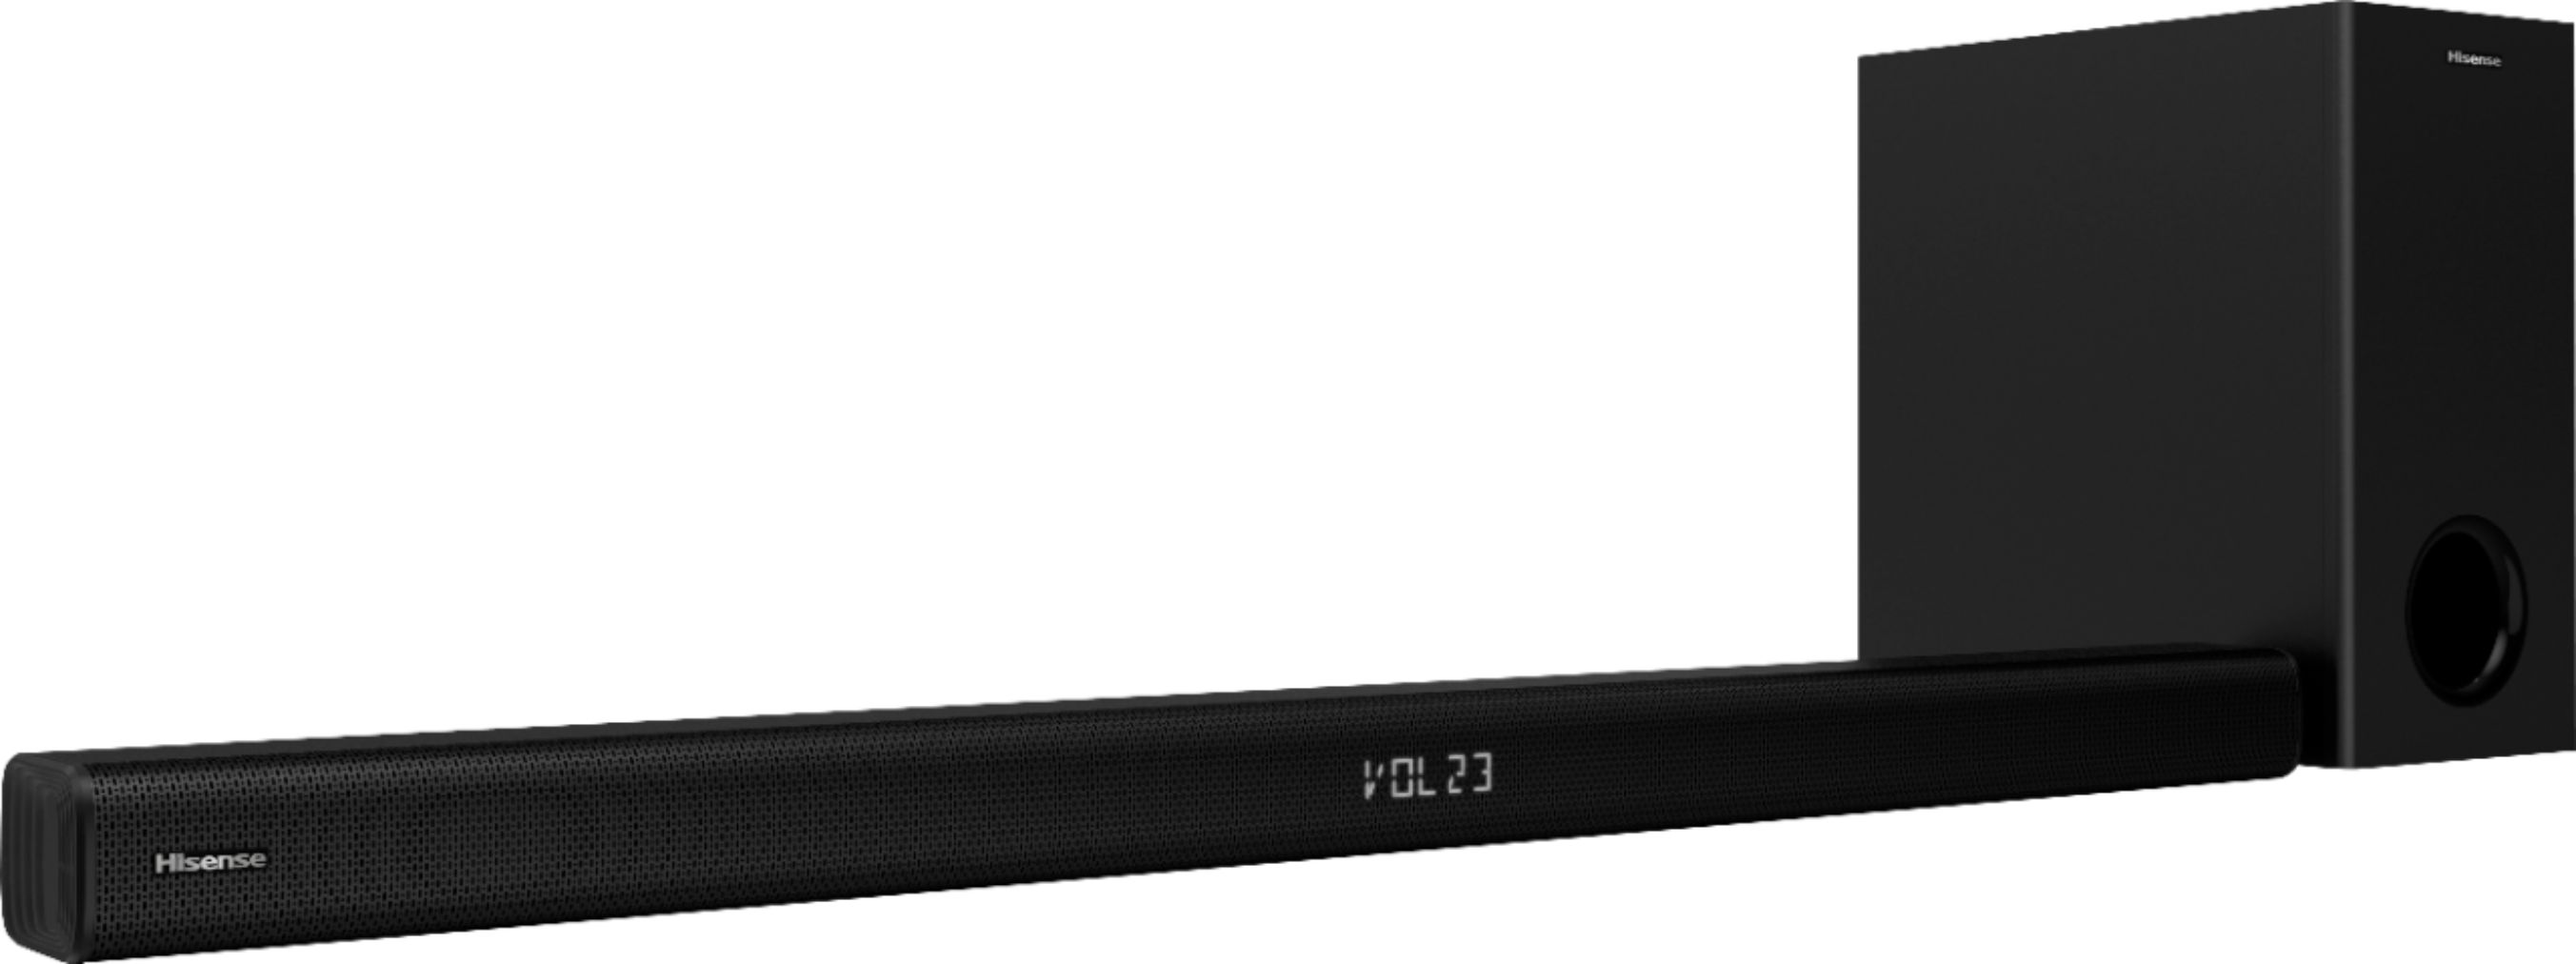 Wireless Hisense Subwoofer with Black Soundbar 2.1-Channel Buy: HS218 Best